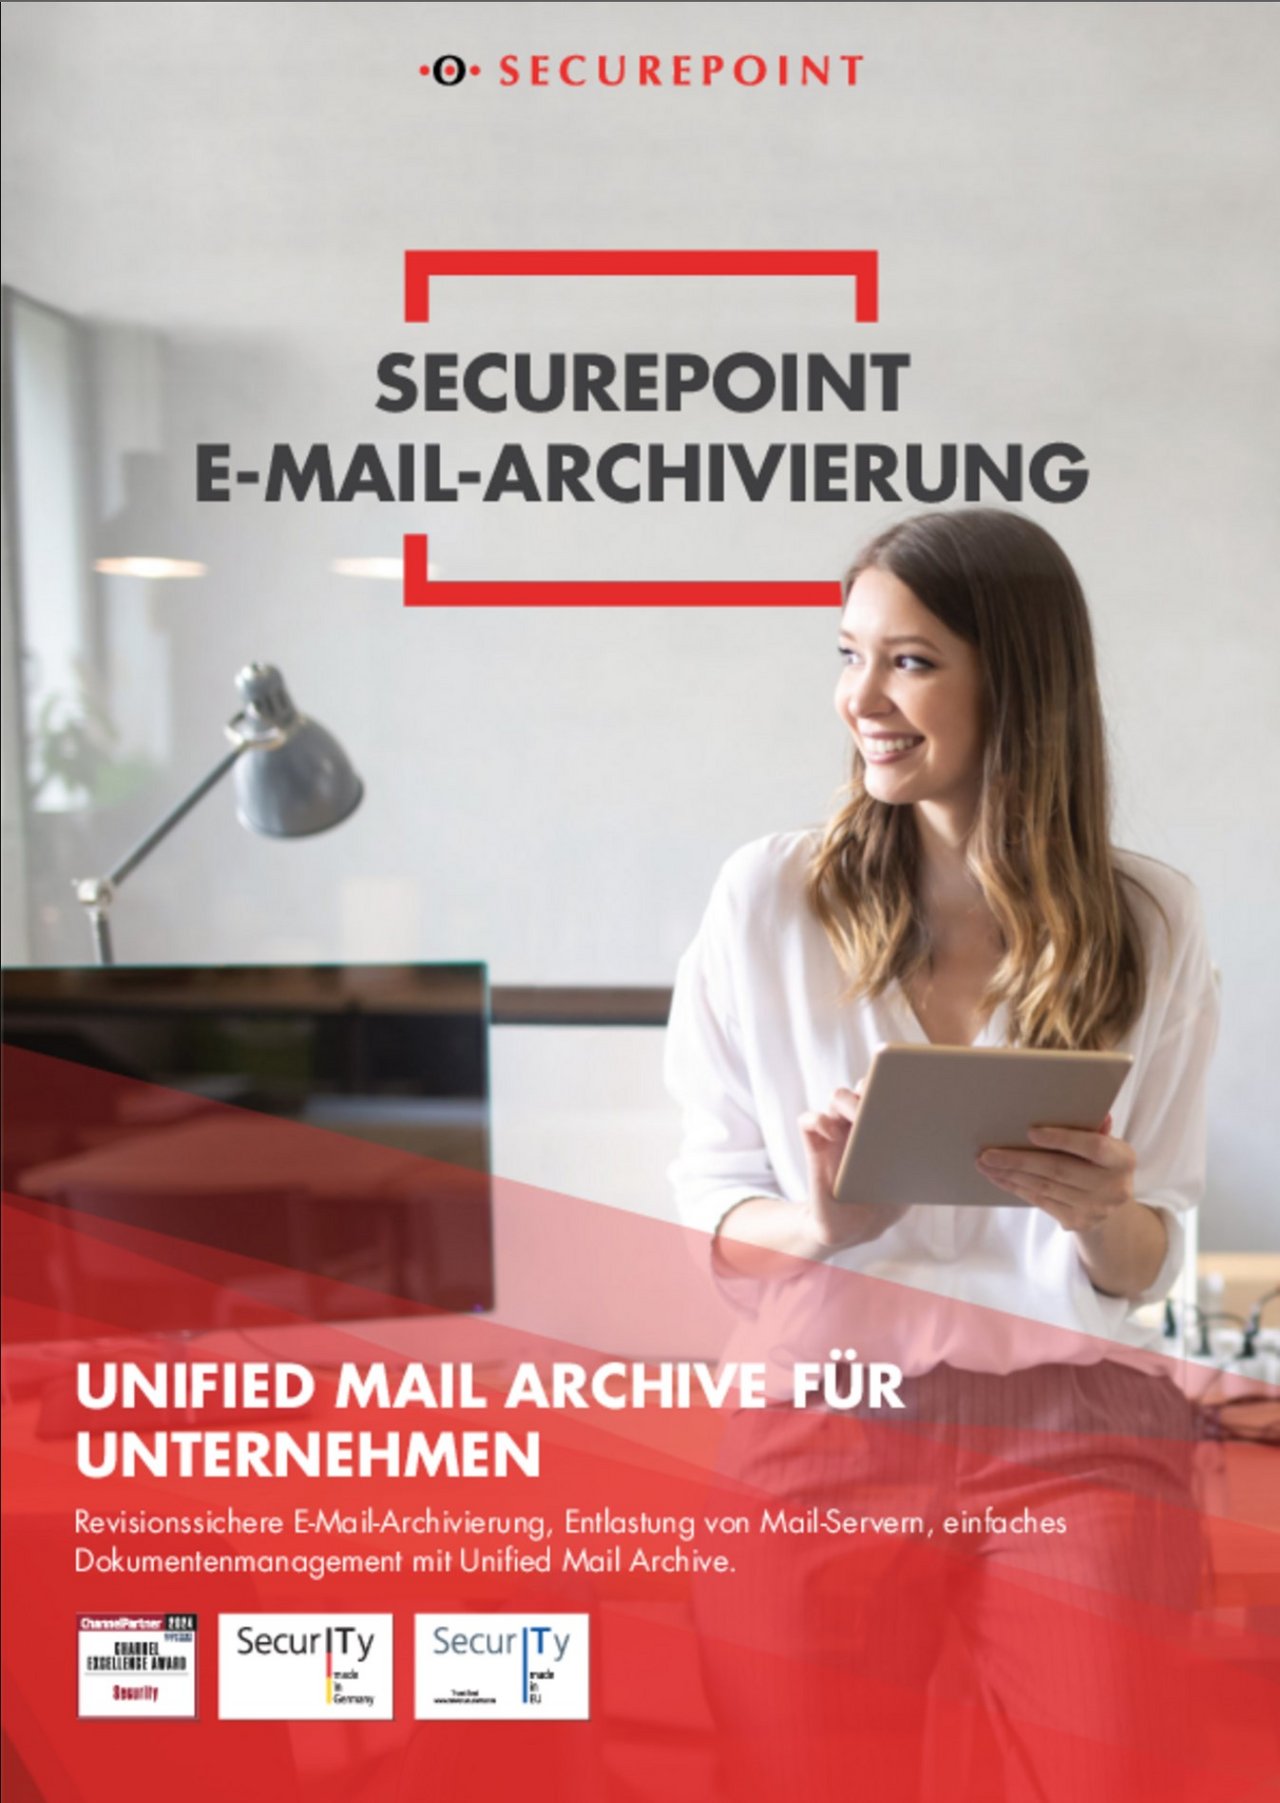 Titelbild des Securepoint Prospektes "E-Mail-Archivierung"